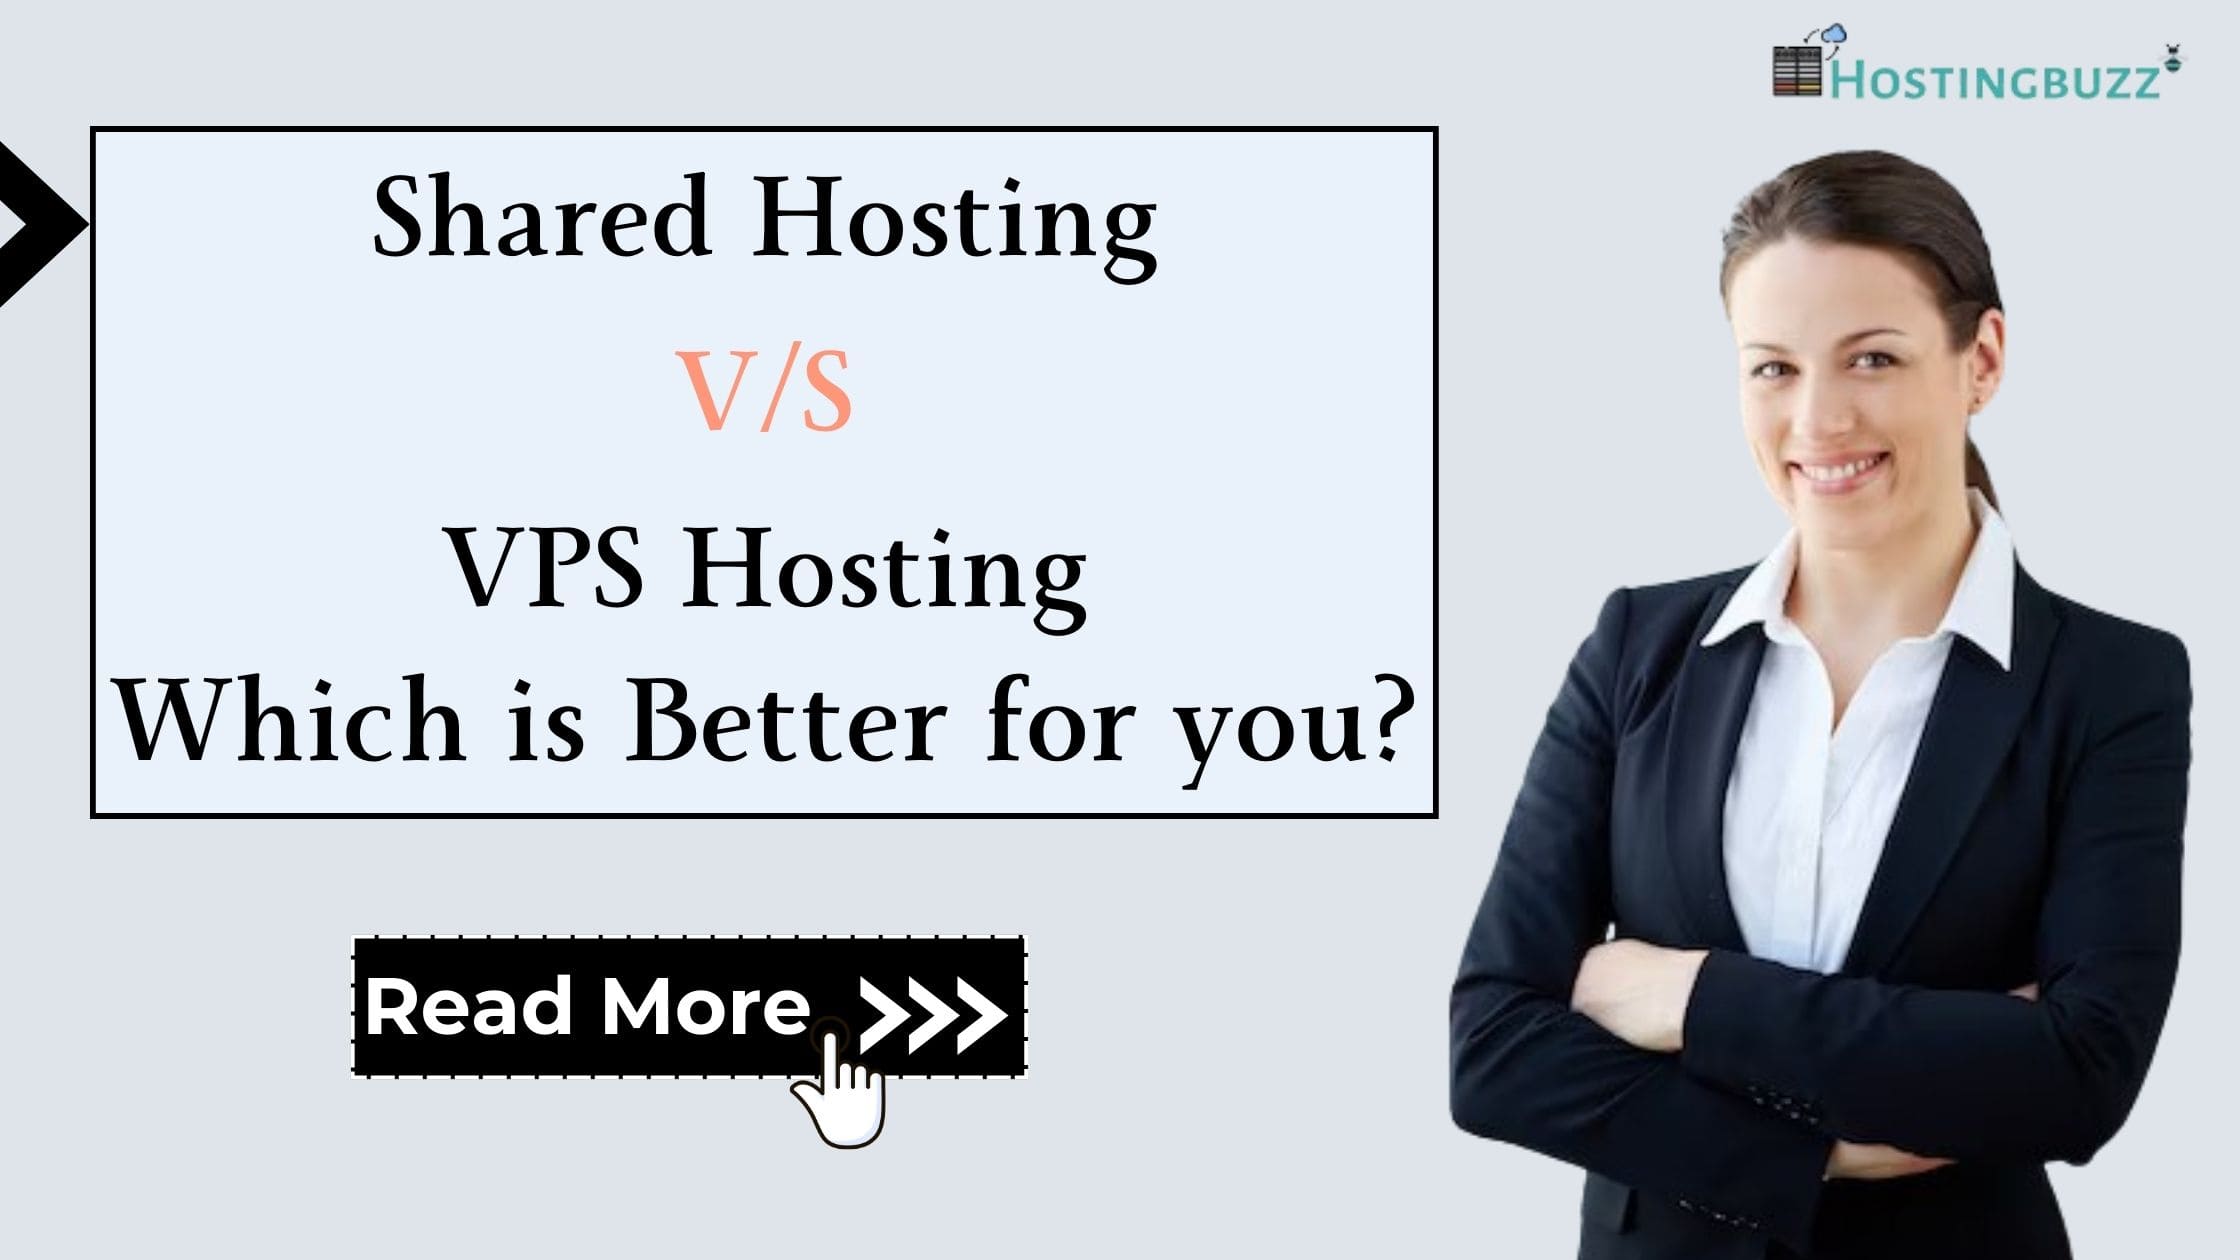 Two important options are Shared Hosting v/s. VPS Hosting sometimes known a “Shared server vs VPS" or "hosting VPS."